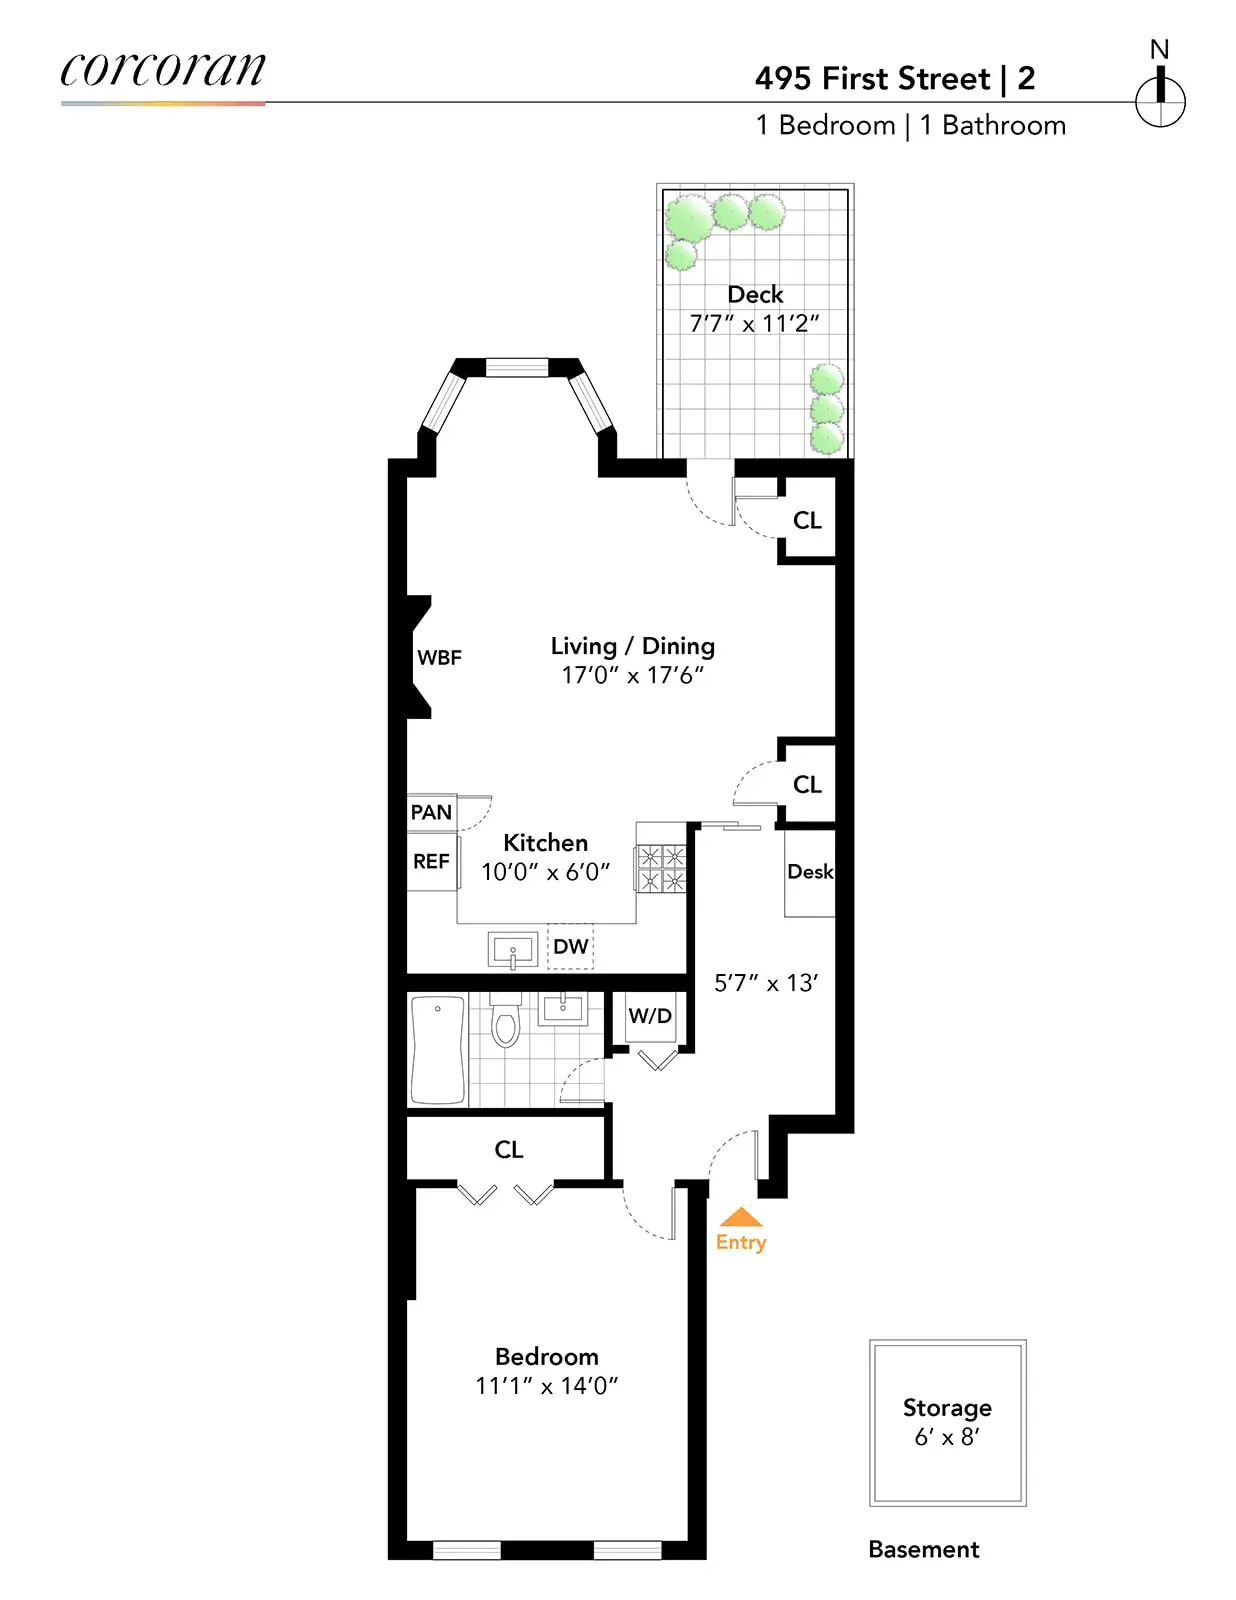 floorplan of unit 2 at 495 1st street in park slope brooklyn